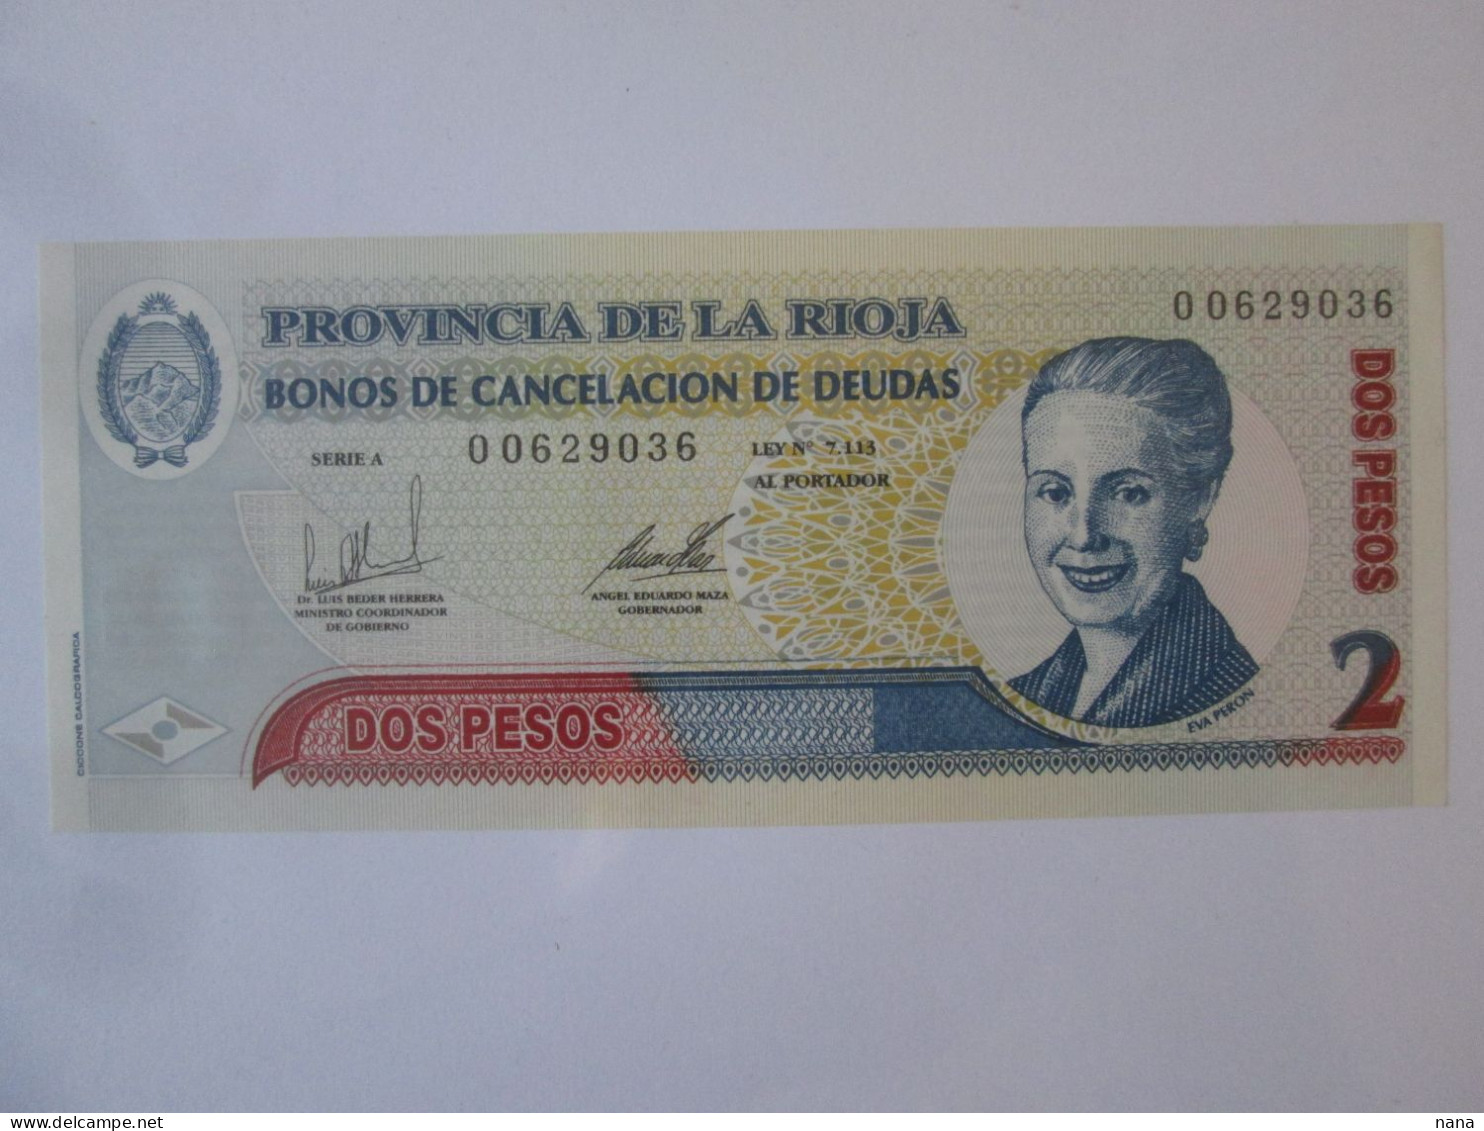 Rare! Argentina 2 Pesos 2003 Province La Rioja Banknote UNC,see Pictures - Argentine